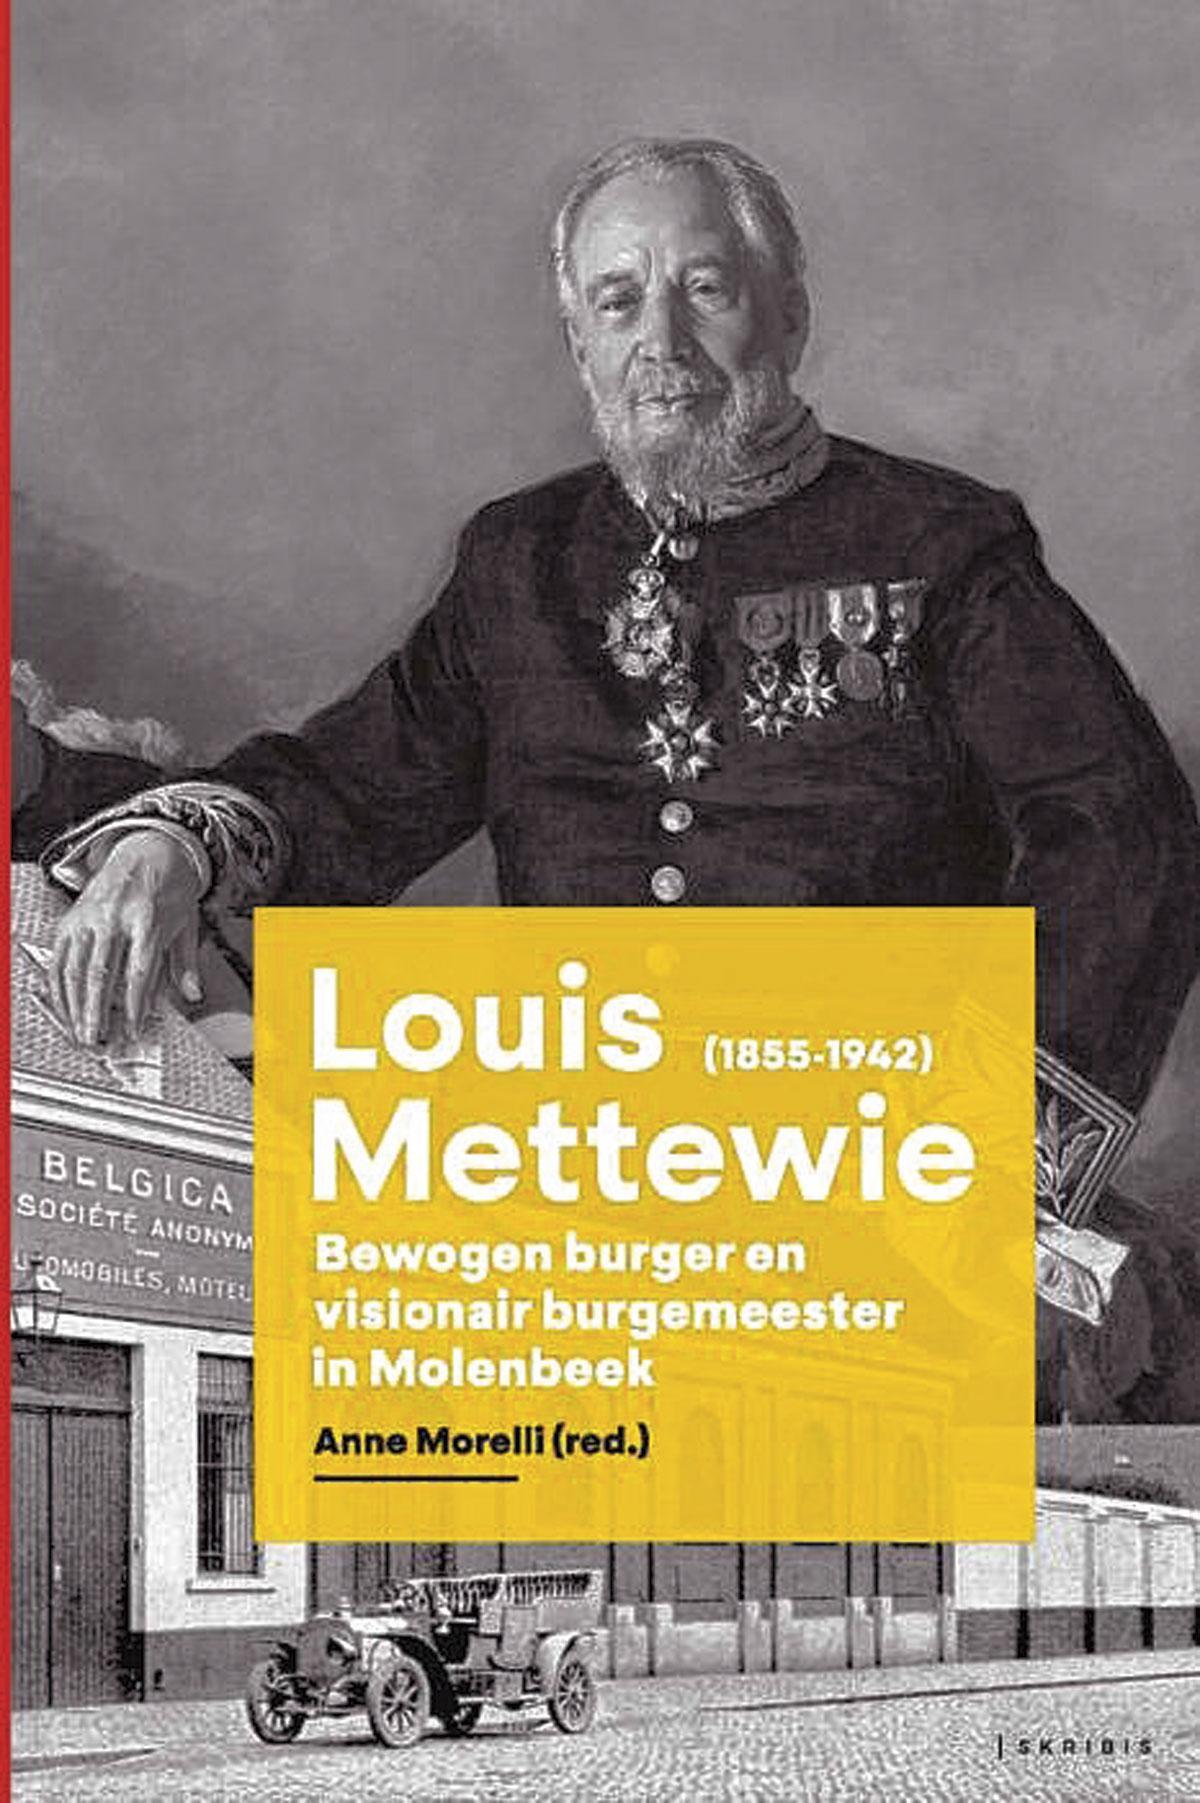 Louis Mettewie (1855‑1942). Bewogen burger en visionair burgemeester in Molenbeek, red. Ann Morelli, Liberas vzw, 196 blz., 19 euro. Expo: Louis Mettewie, tot 25/11 in Liberas, Kramersplein 23, 9000 Gent.